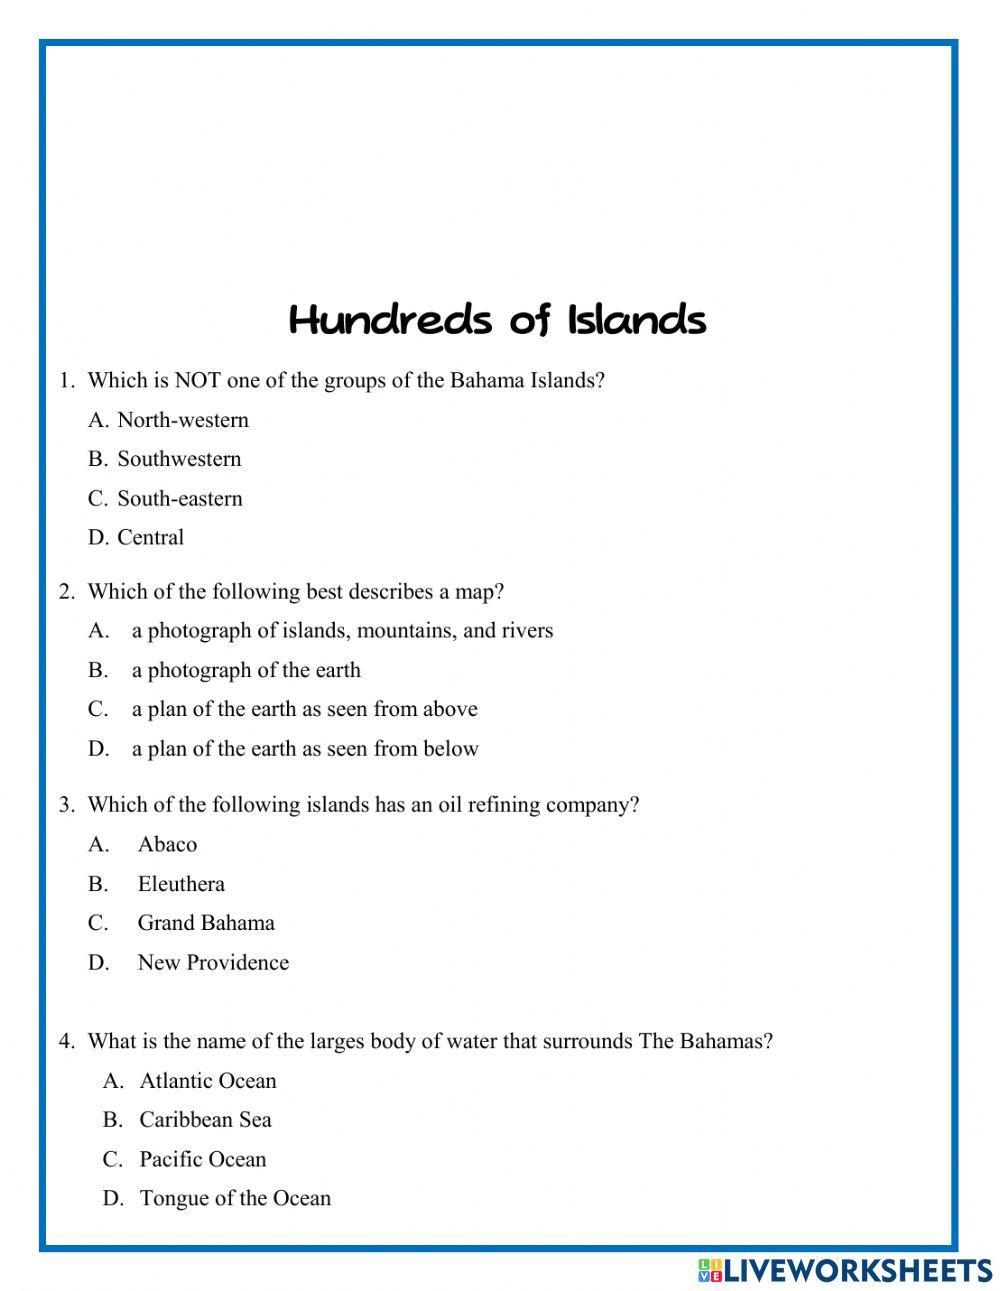 Hundreds of Islands